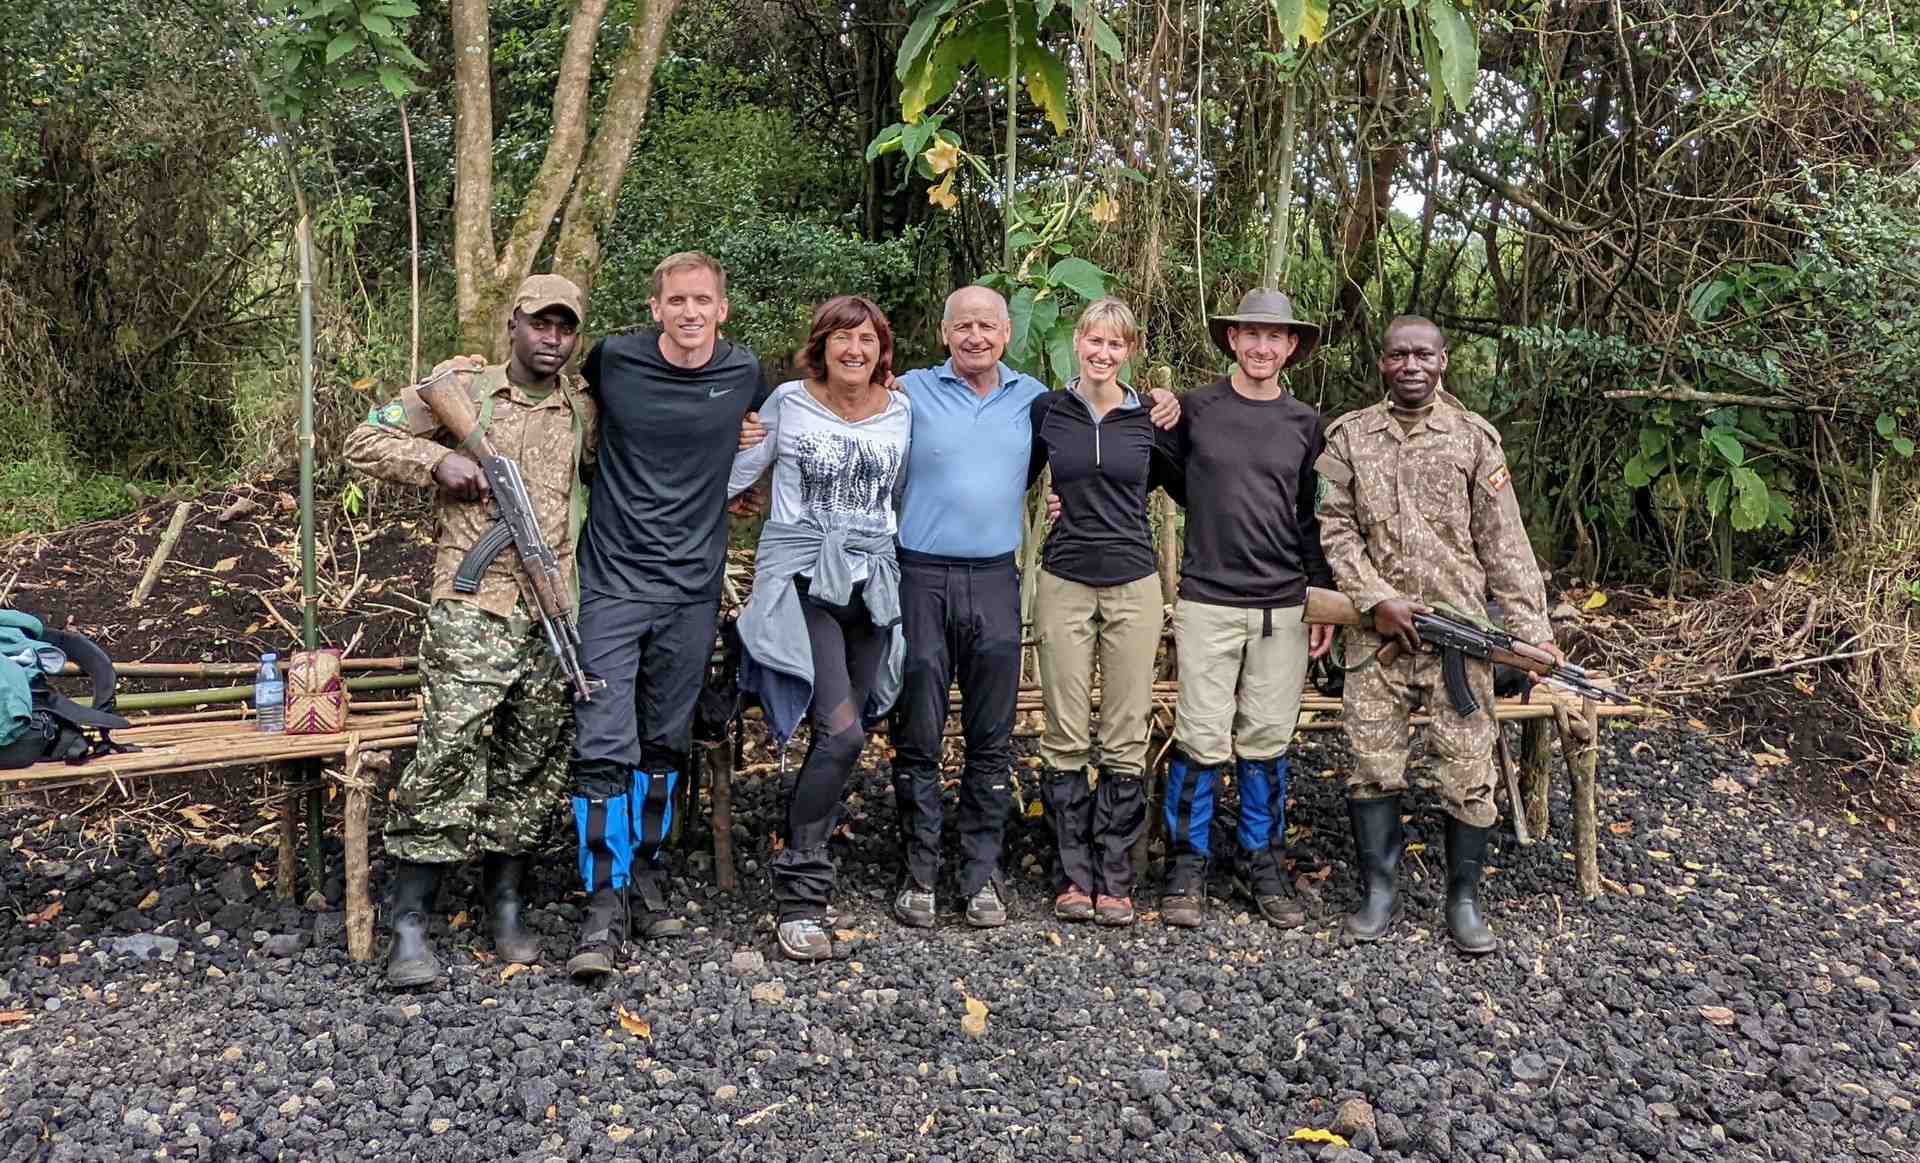 David Simpson, mom, dad, friends and rangers at Mgahinga National Park in Uganda. Uganda Gorilla trek